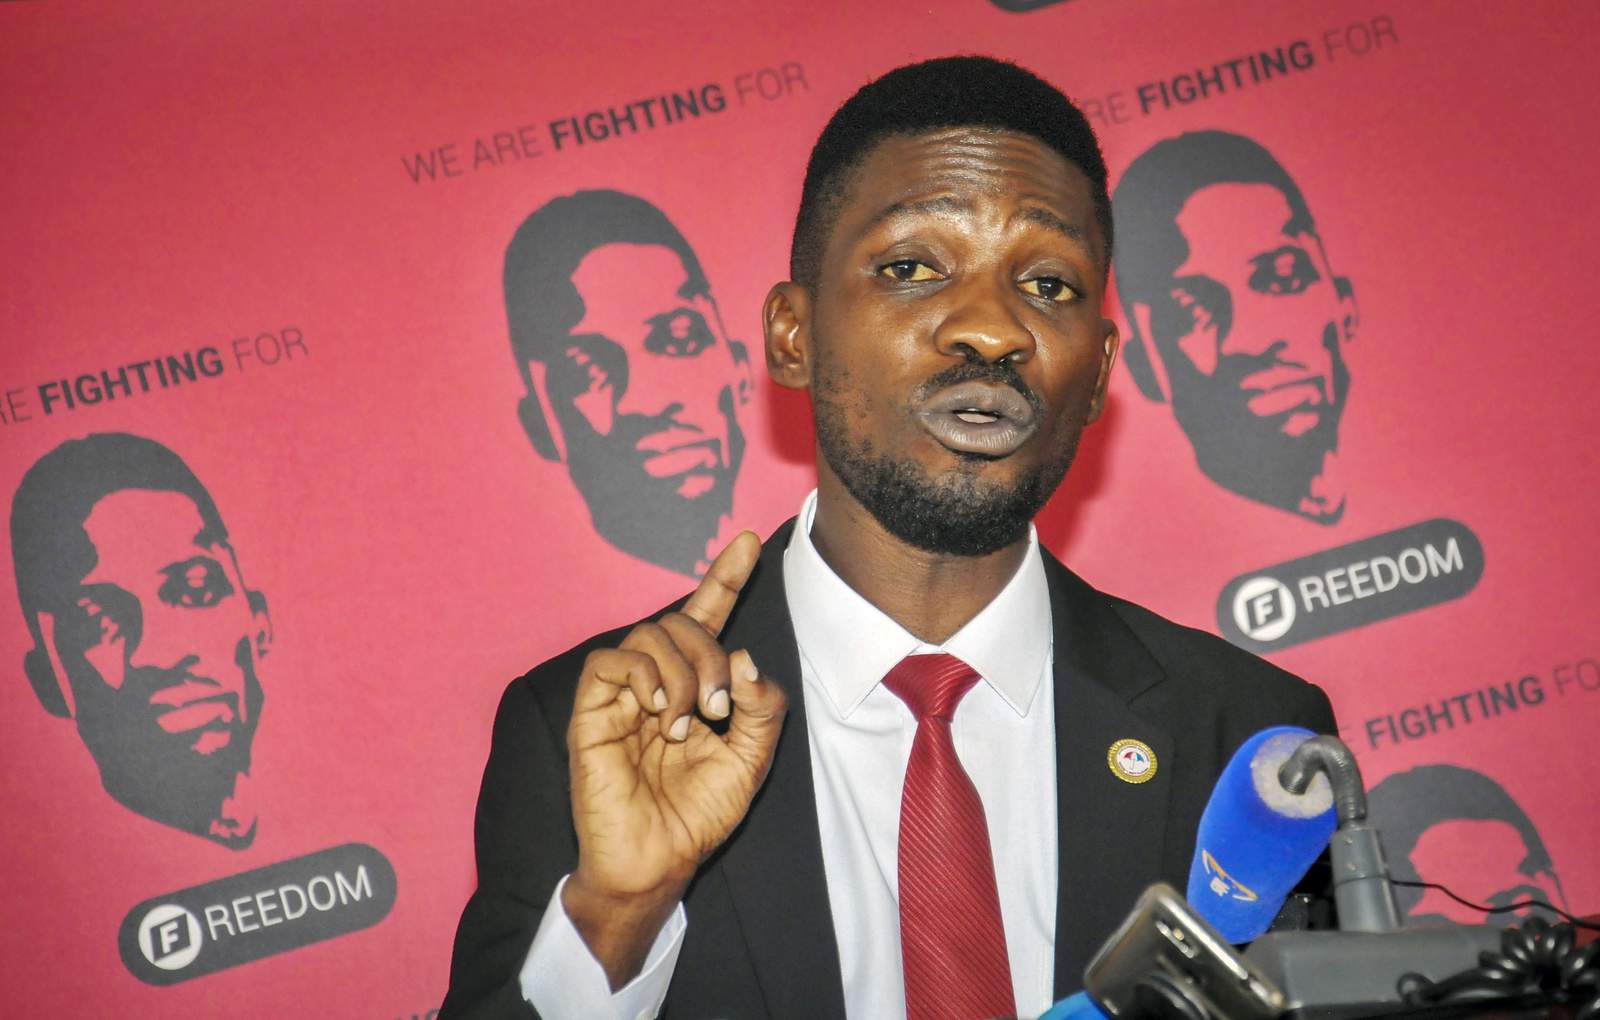 Uganda's Bobi Wine complains of threats to presidential bid